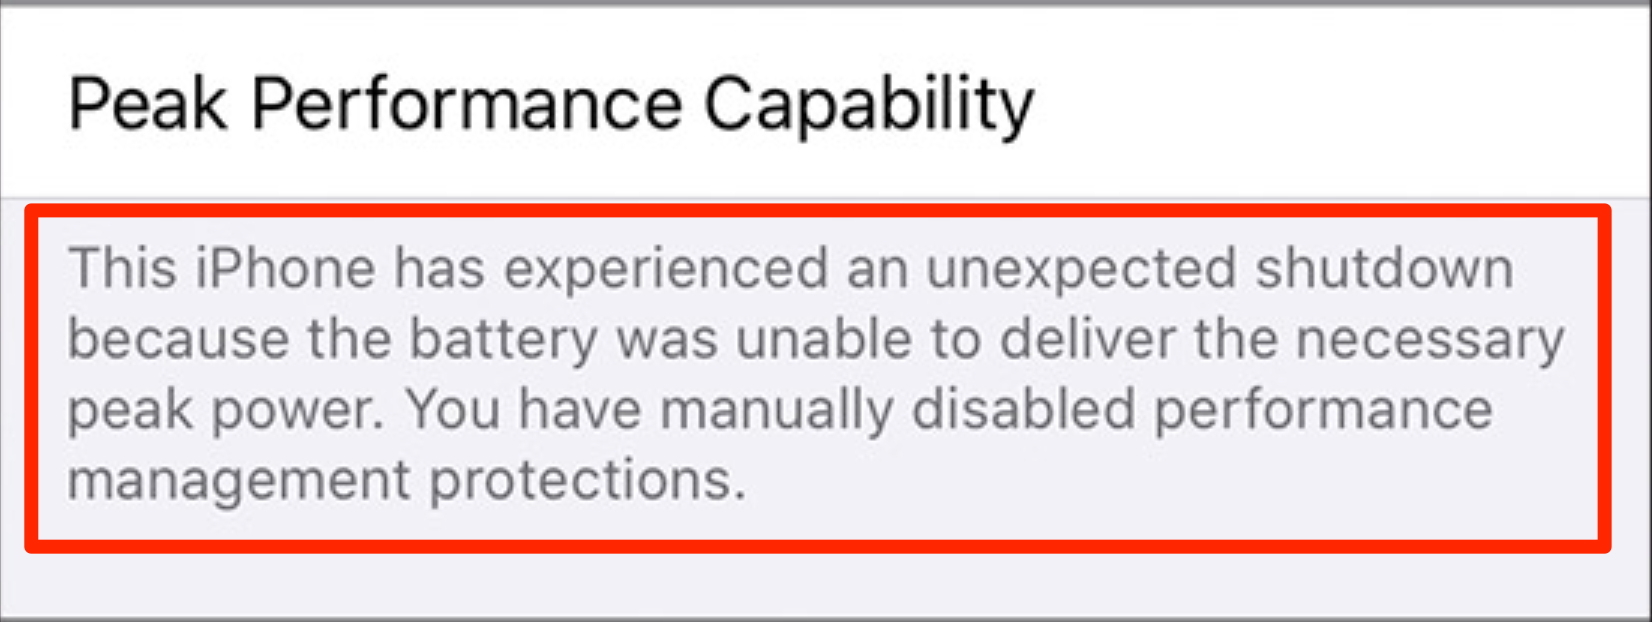 iPhone's peak performance capability message.